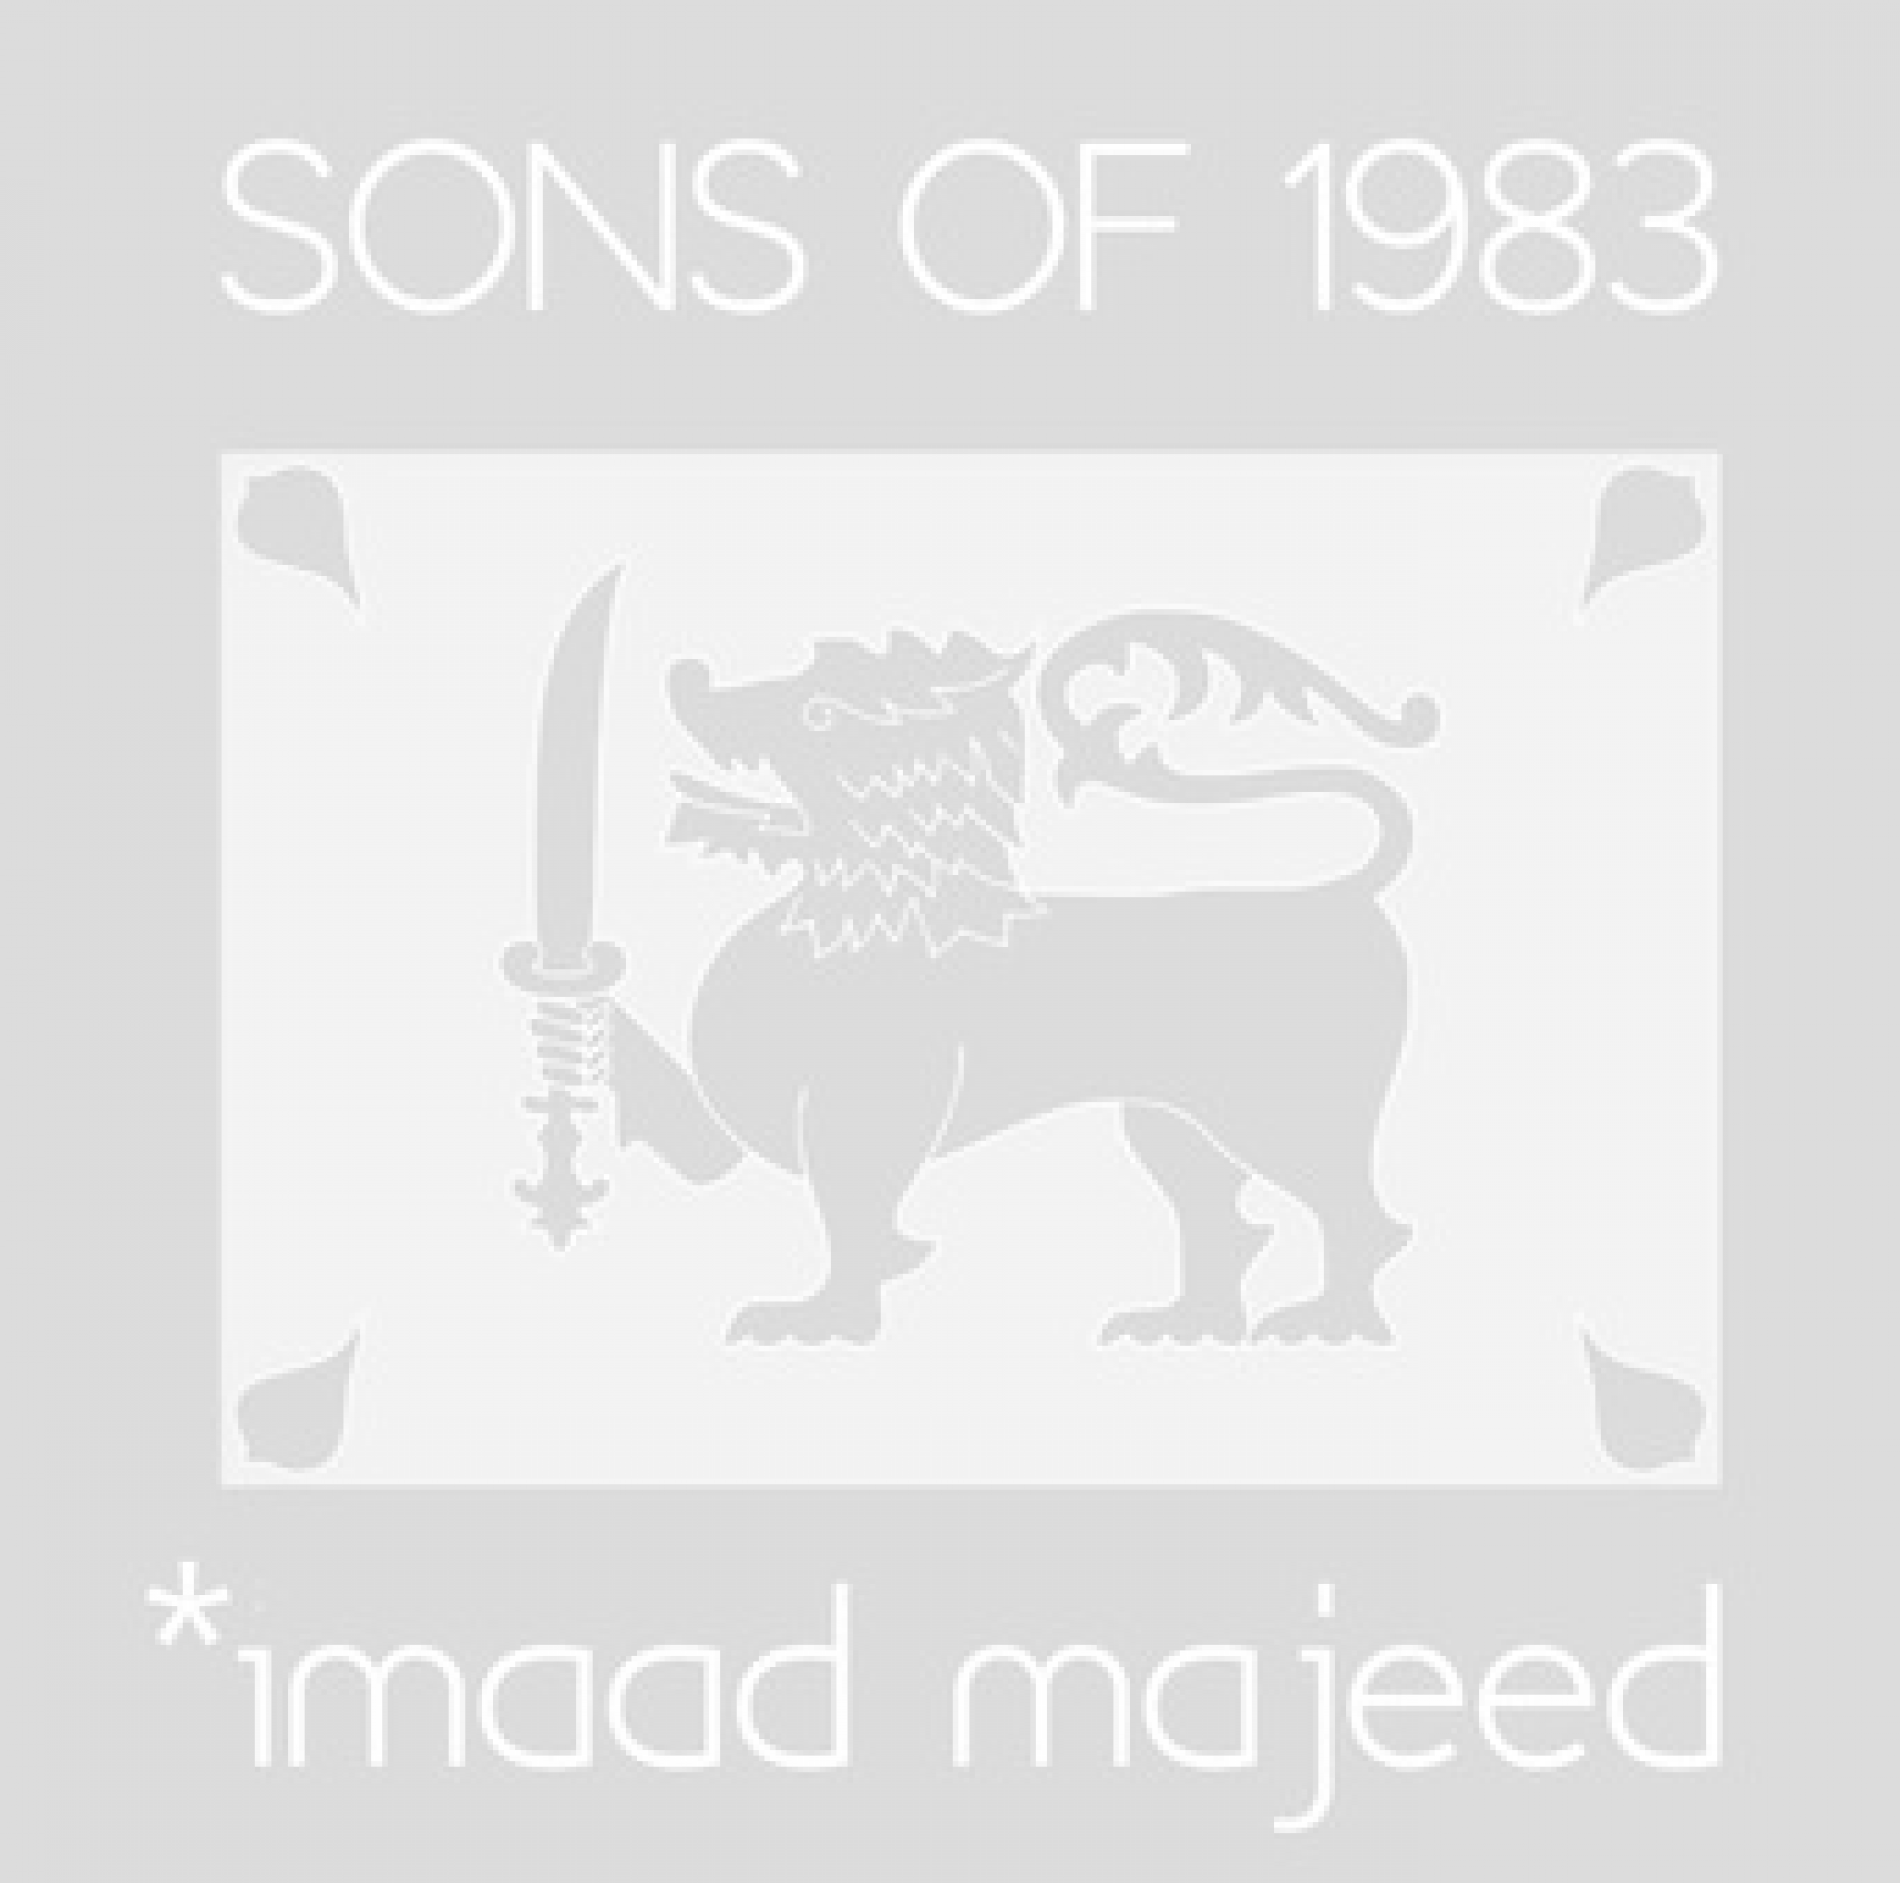 *imaad majeed – Sons Of 1983